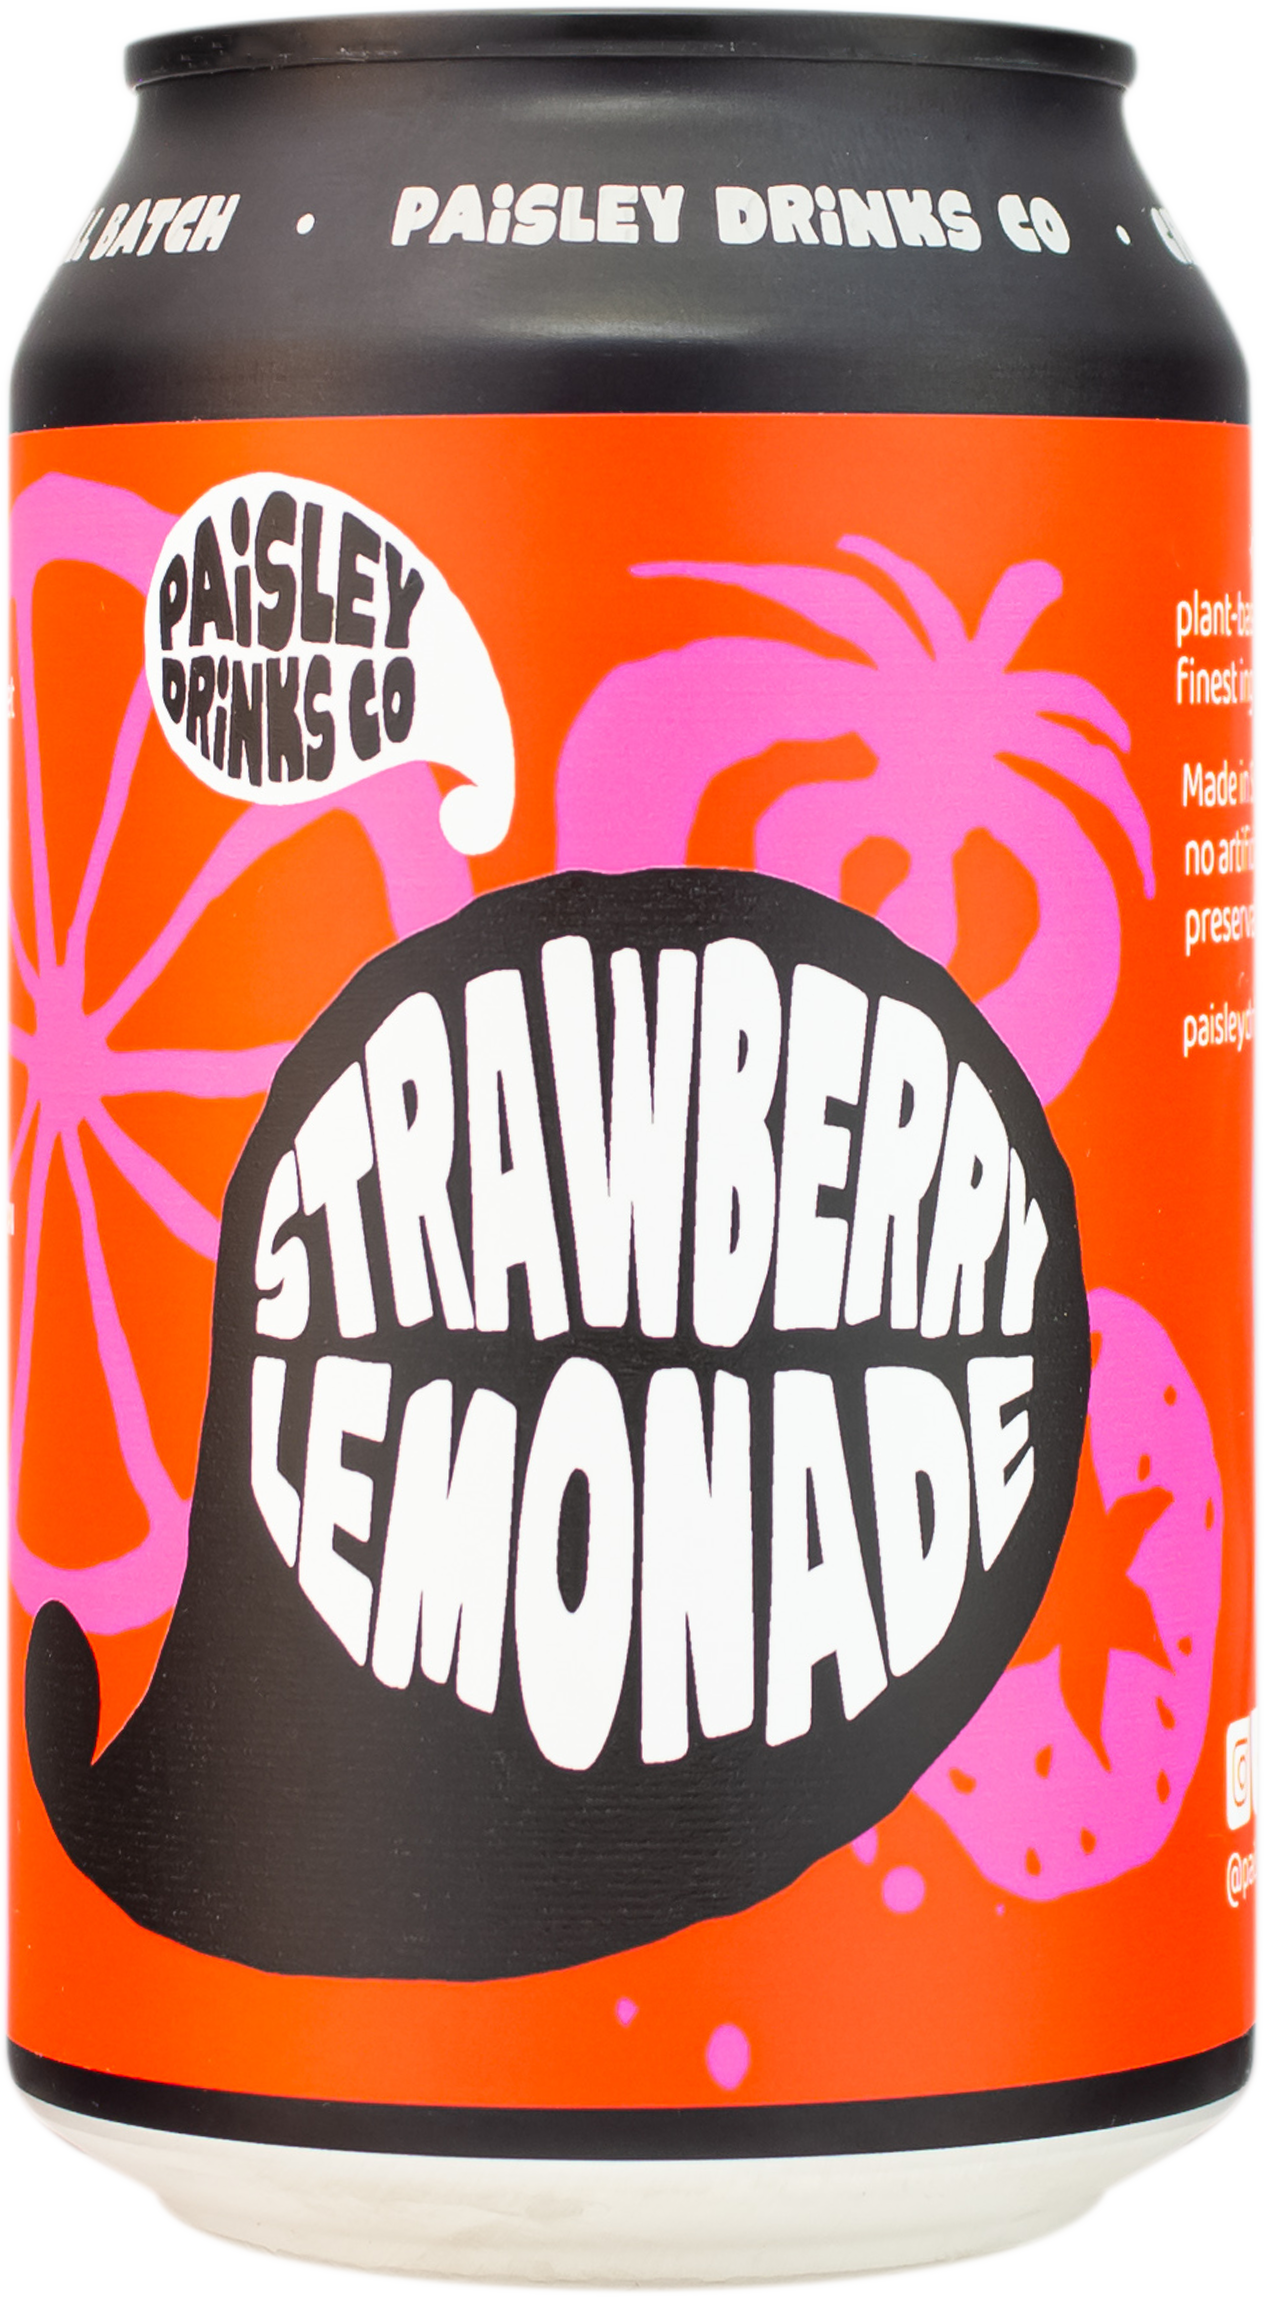 Paisley Drinks Co - Strawberry Lemonade